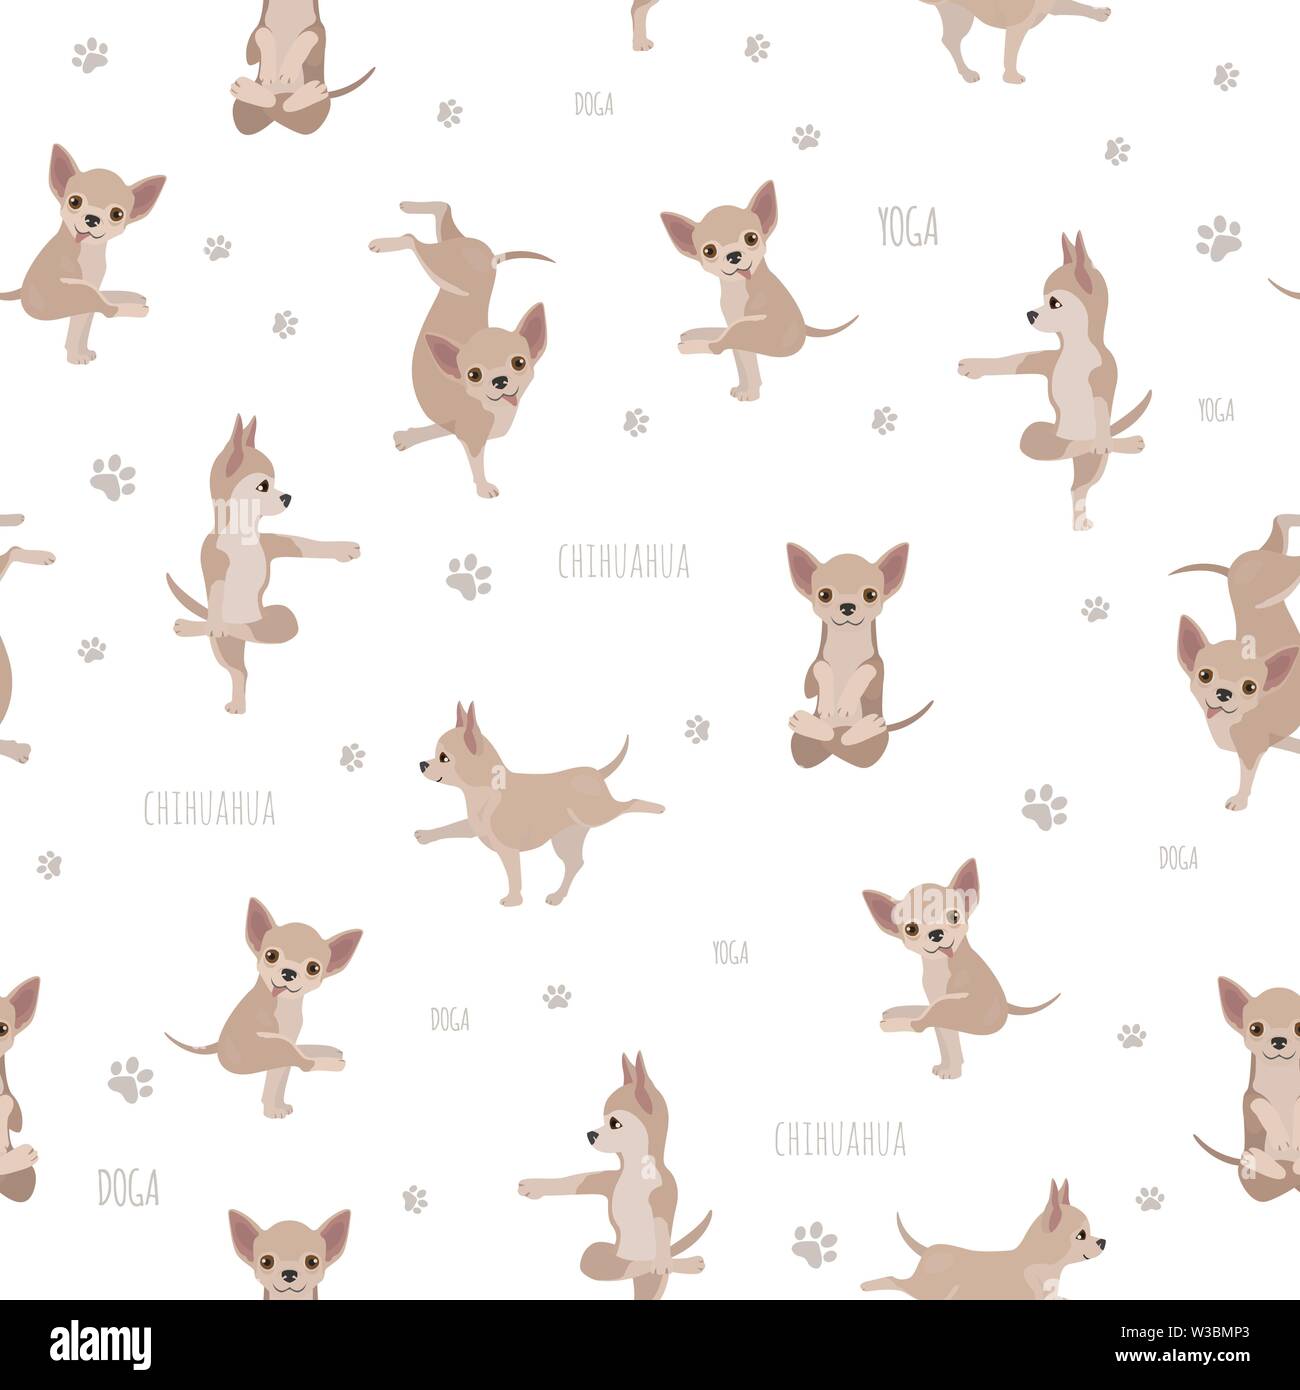 Yoga hunde Posen und Übungen. Chihuahua nahtlose Muster. Vector Illustration Stock Vektor